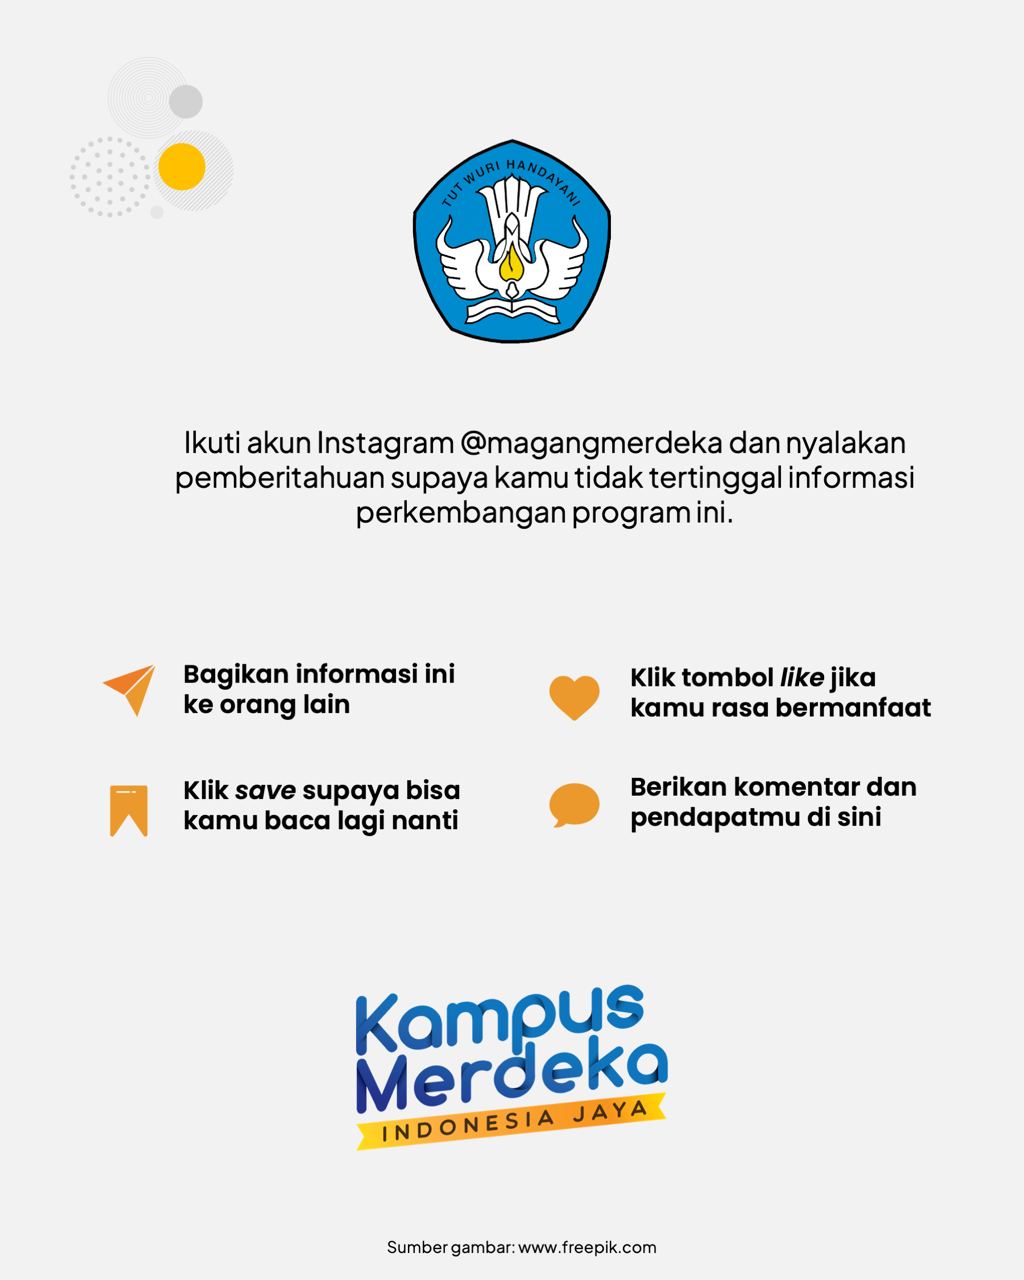 Kampus merdeka.kemdikbud.go.id 2021